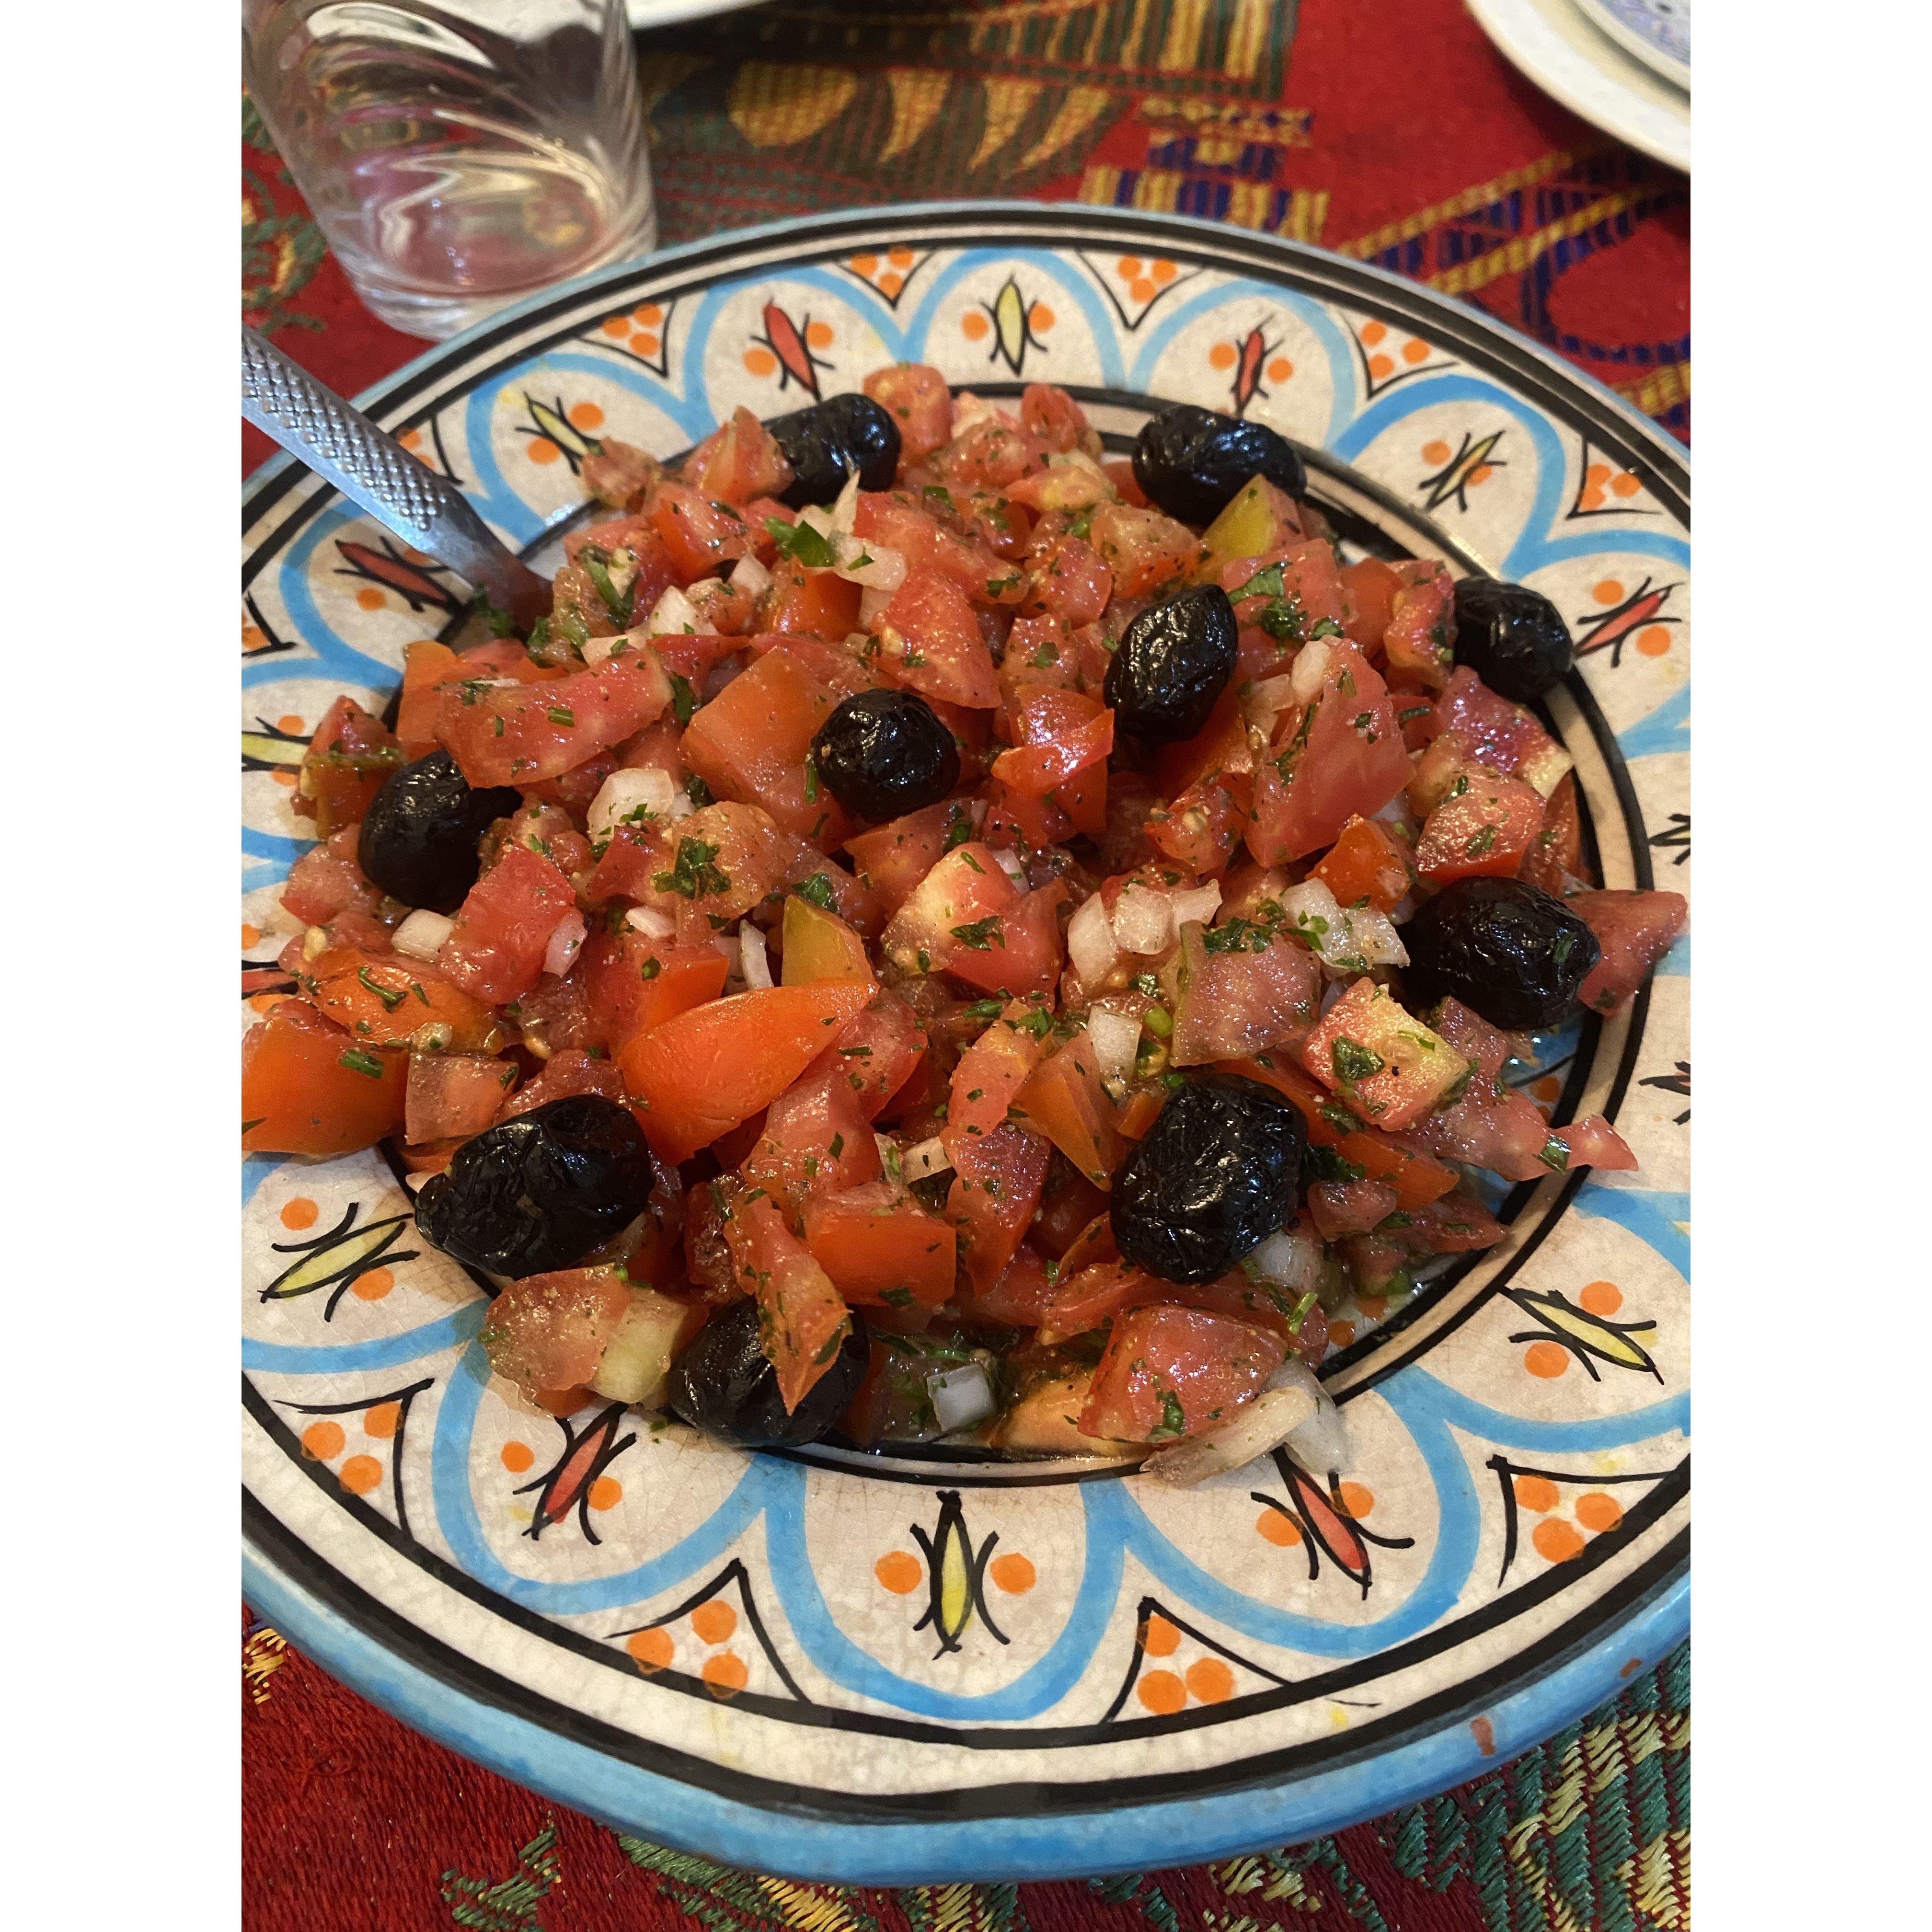 Tomato and olive salad